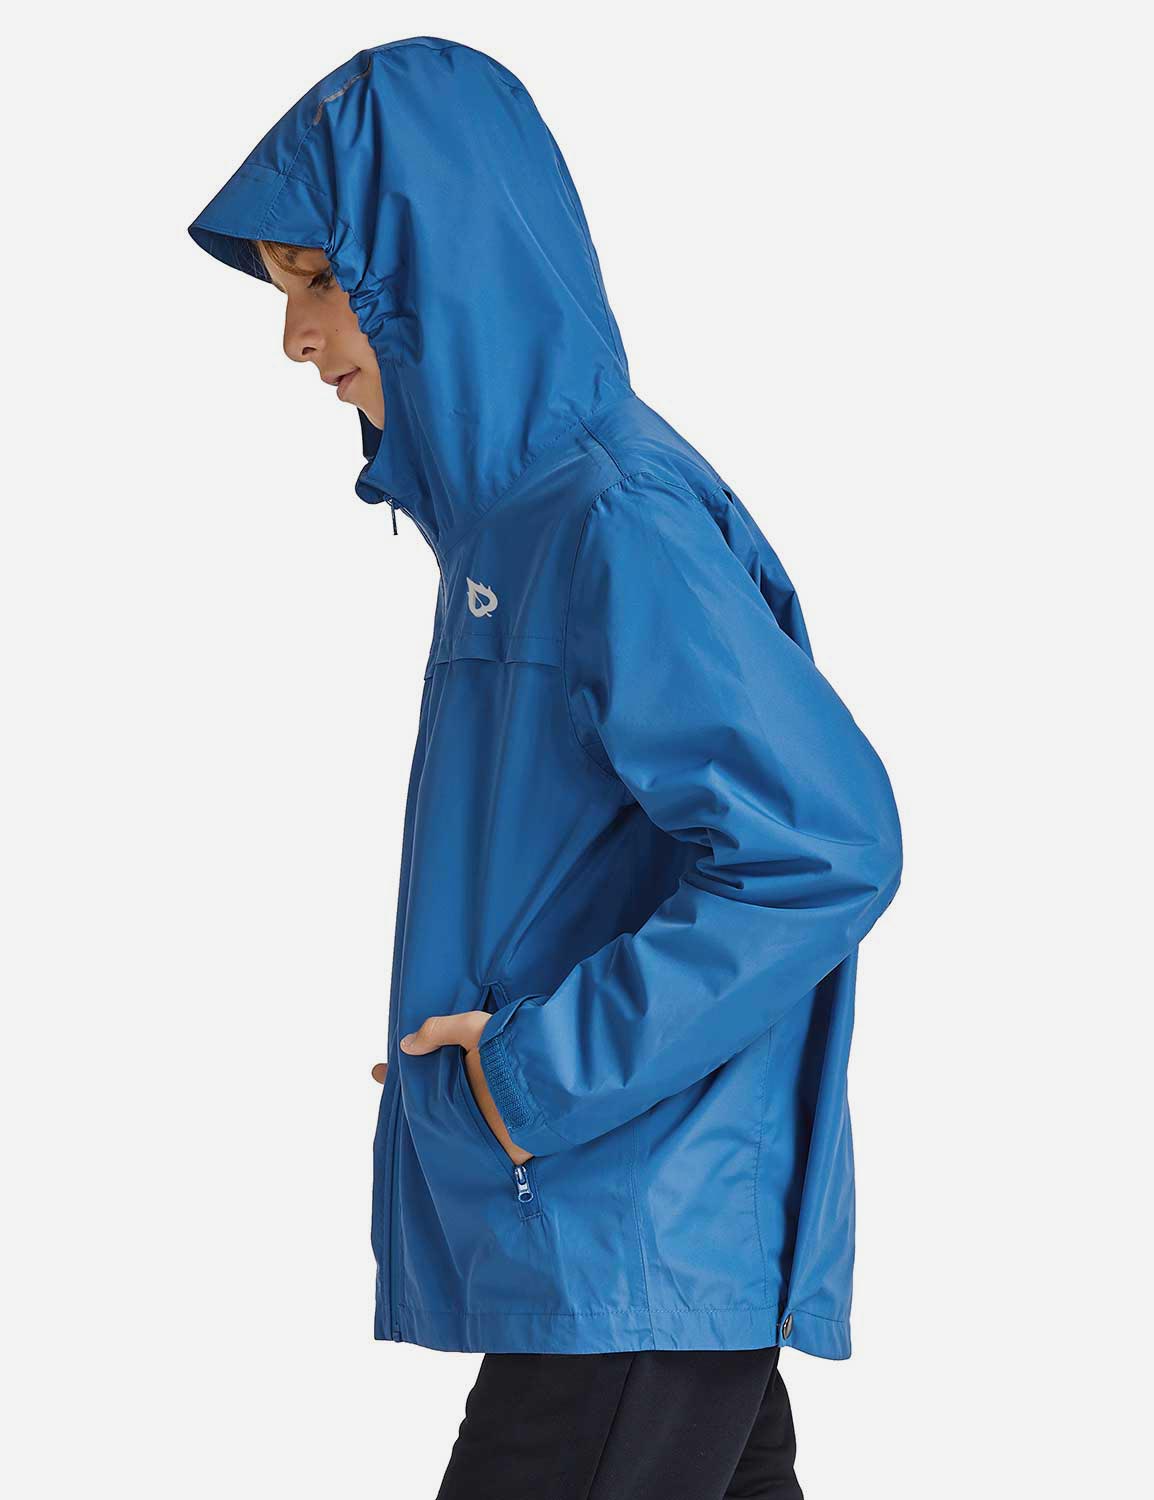 Baleaf Kid's Waterproof Outdoor Hooded Cycling Rain Jacket cai037 Princess Blue Side